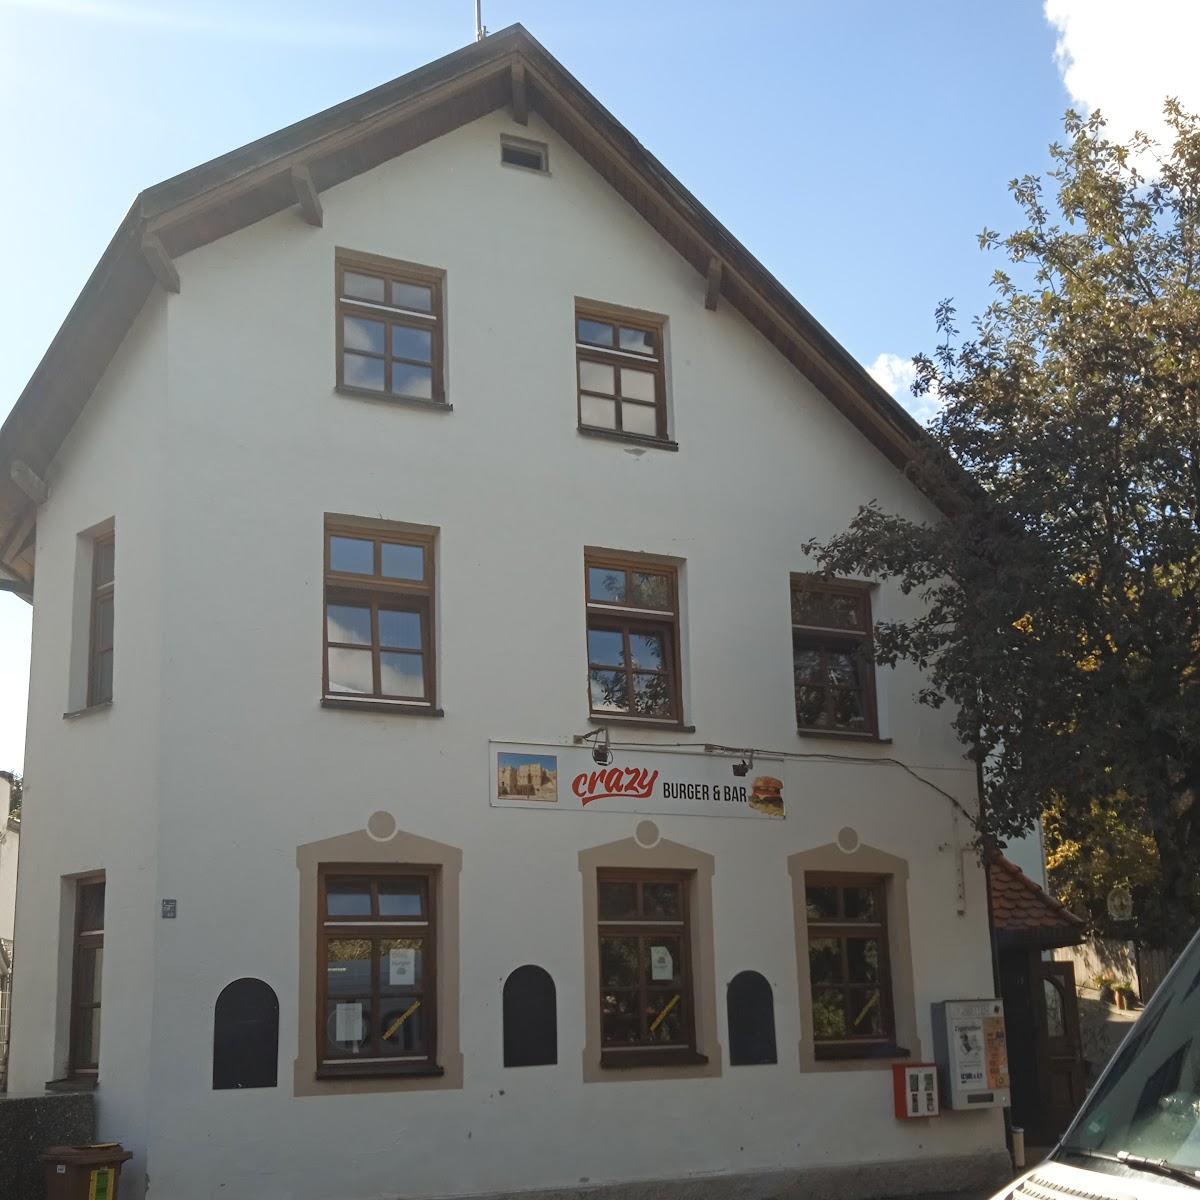 Restaurant "Crazy Burger & Bar" in Kempten (Allgäu)